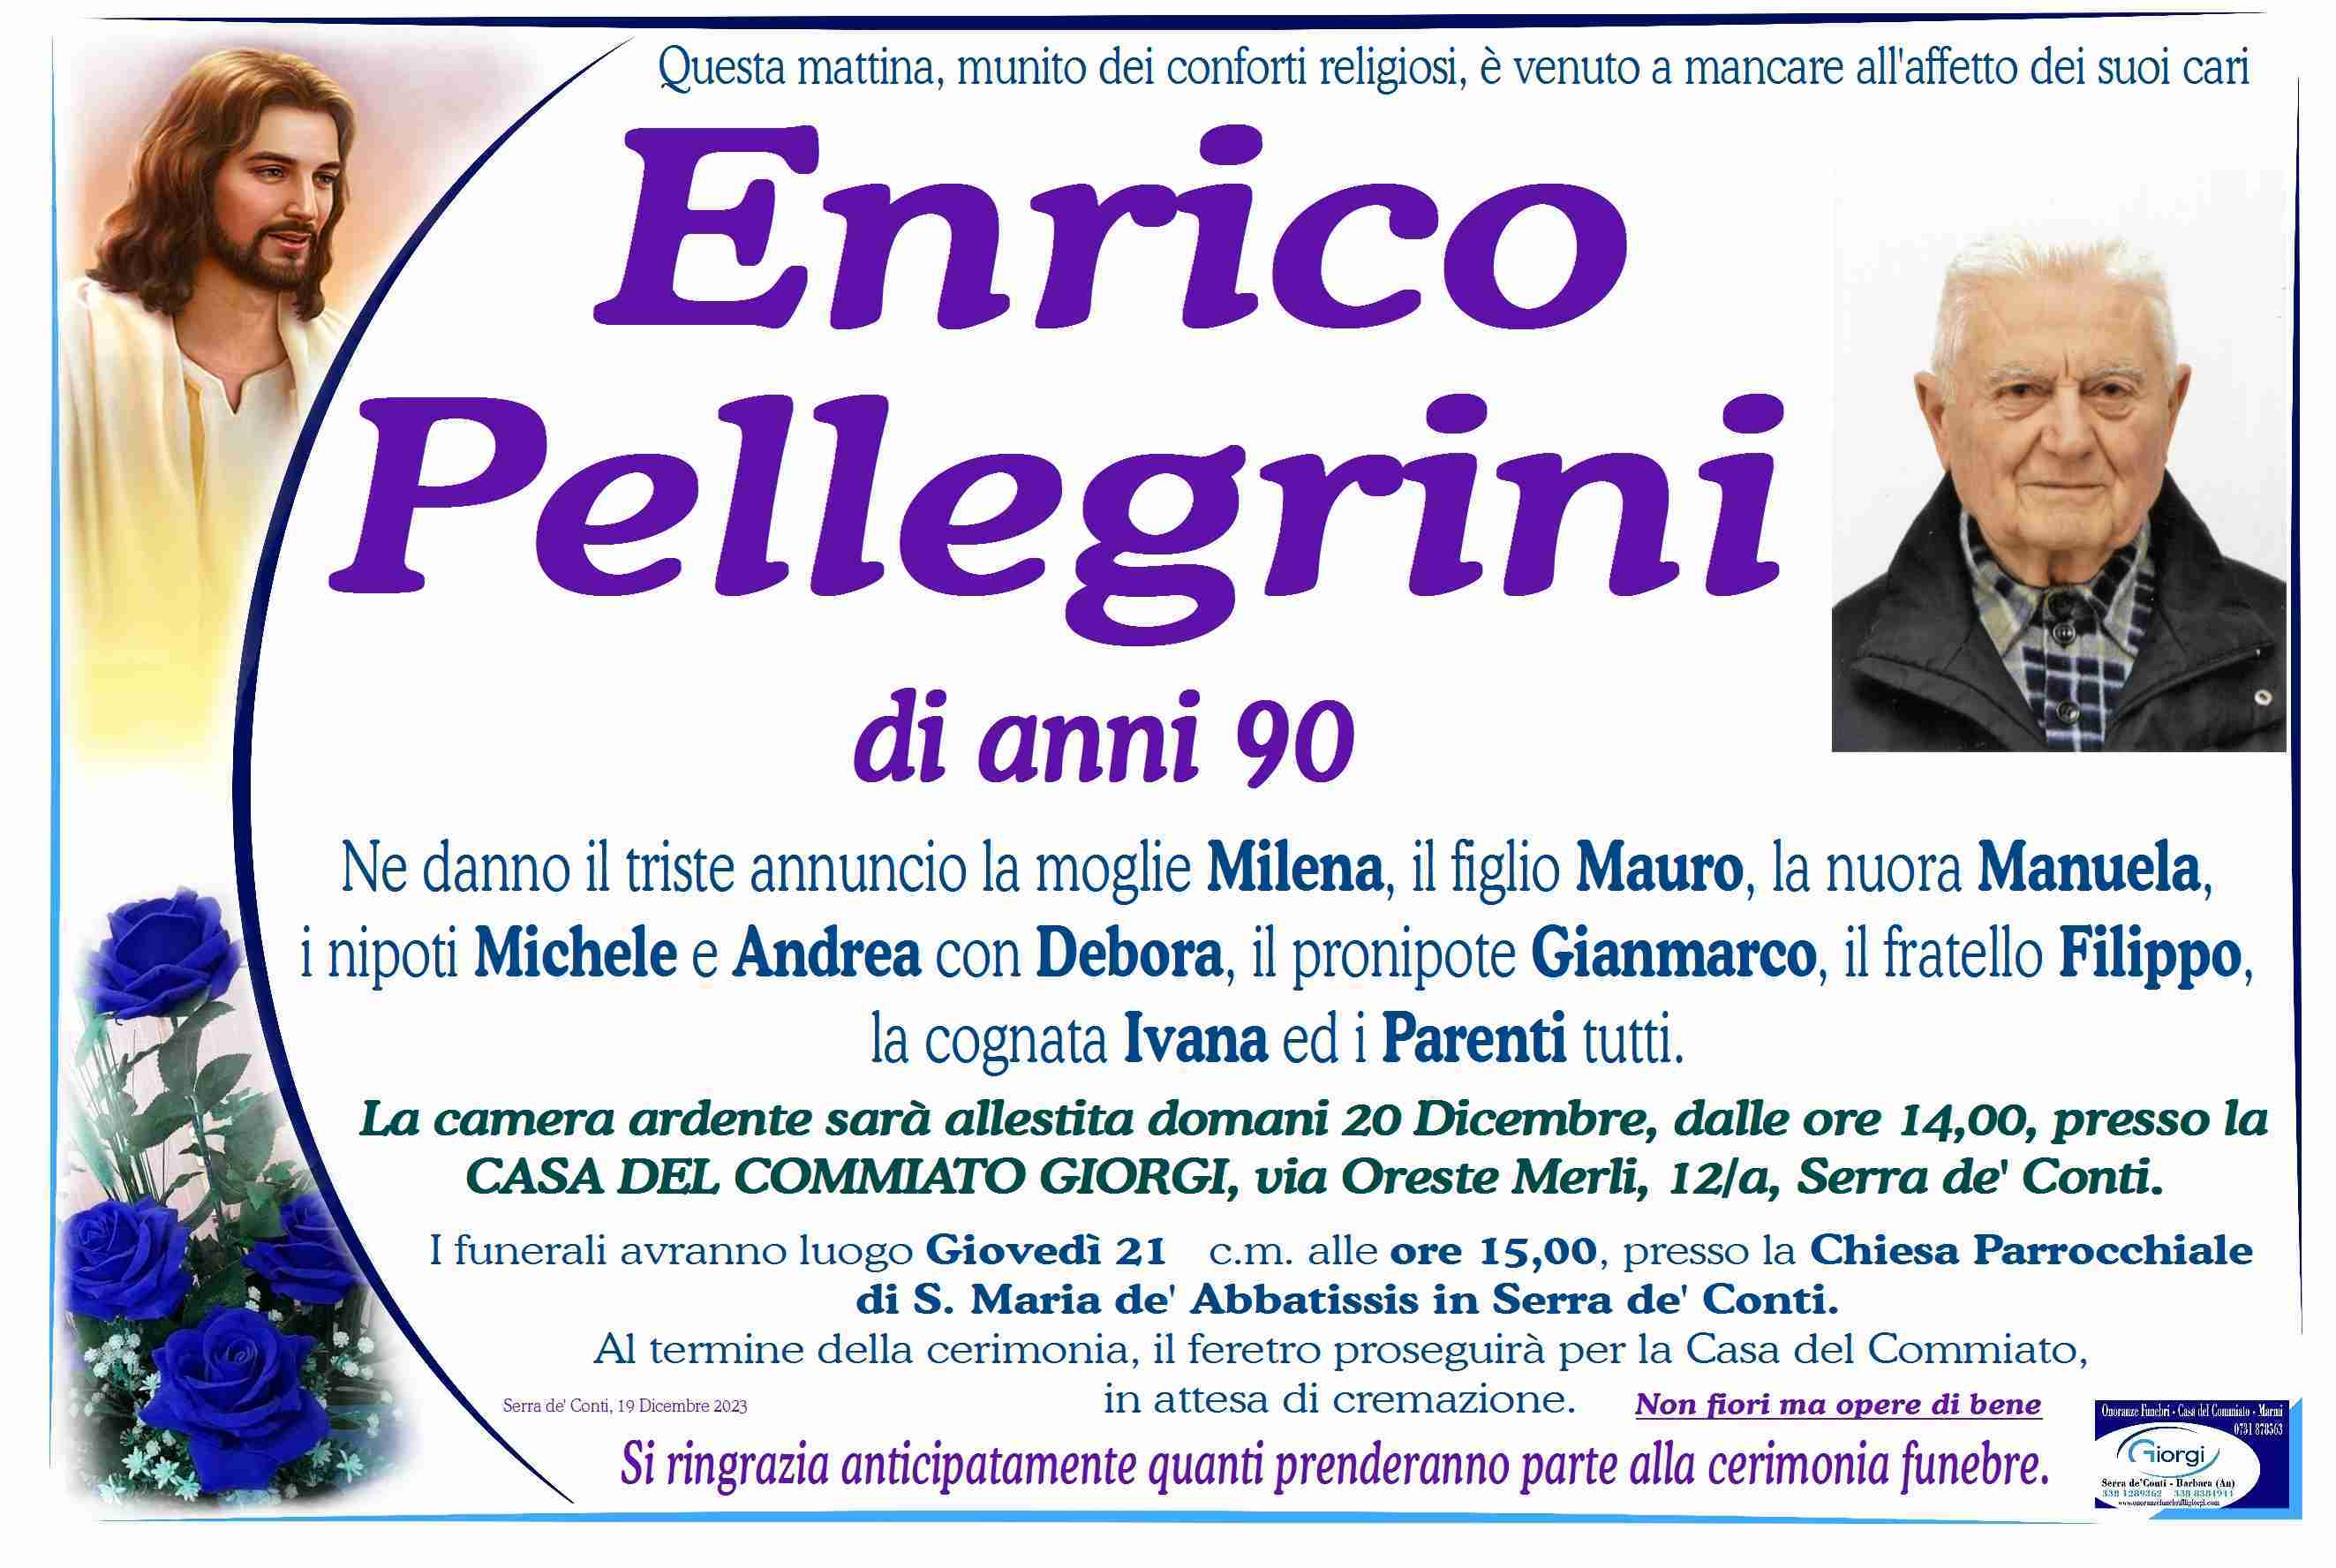 Enrico Pellegrini